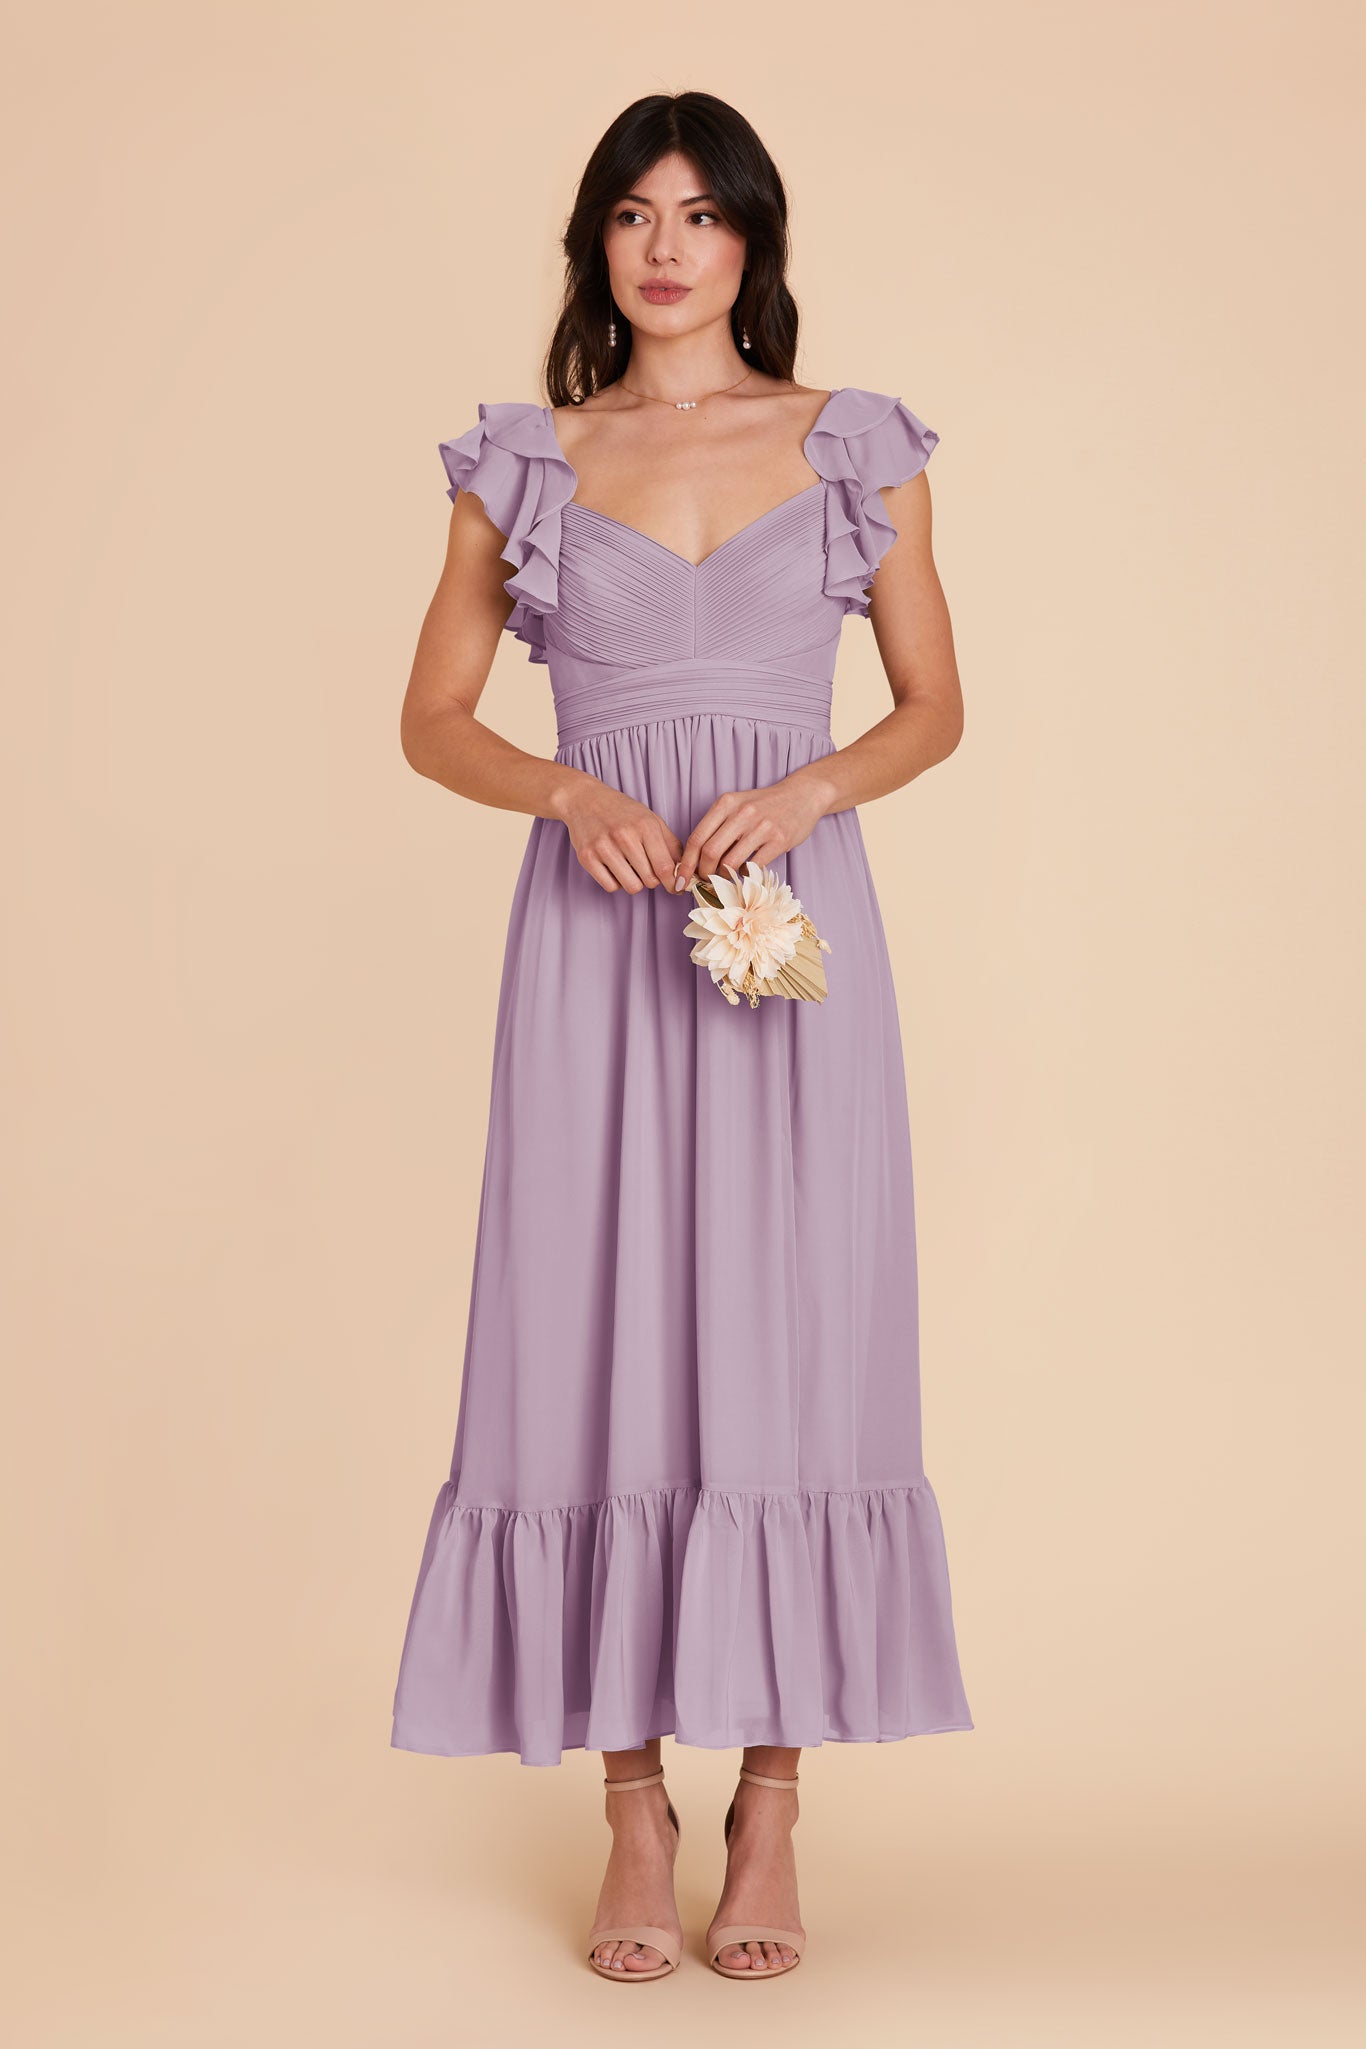 Lavender michelle Chiffon Dress by Birdy Grey